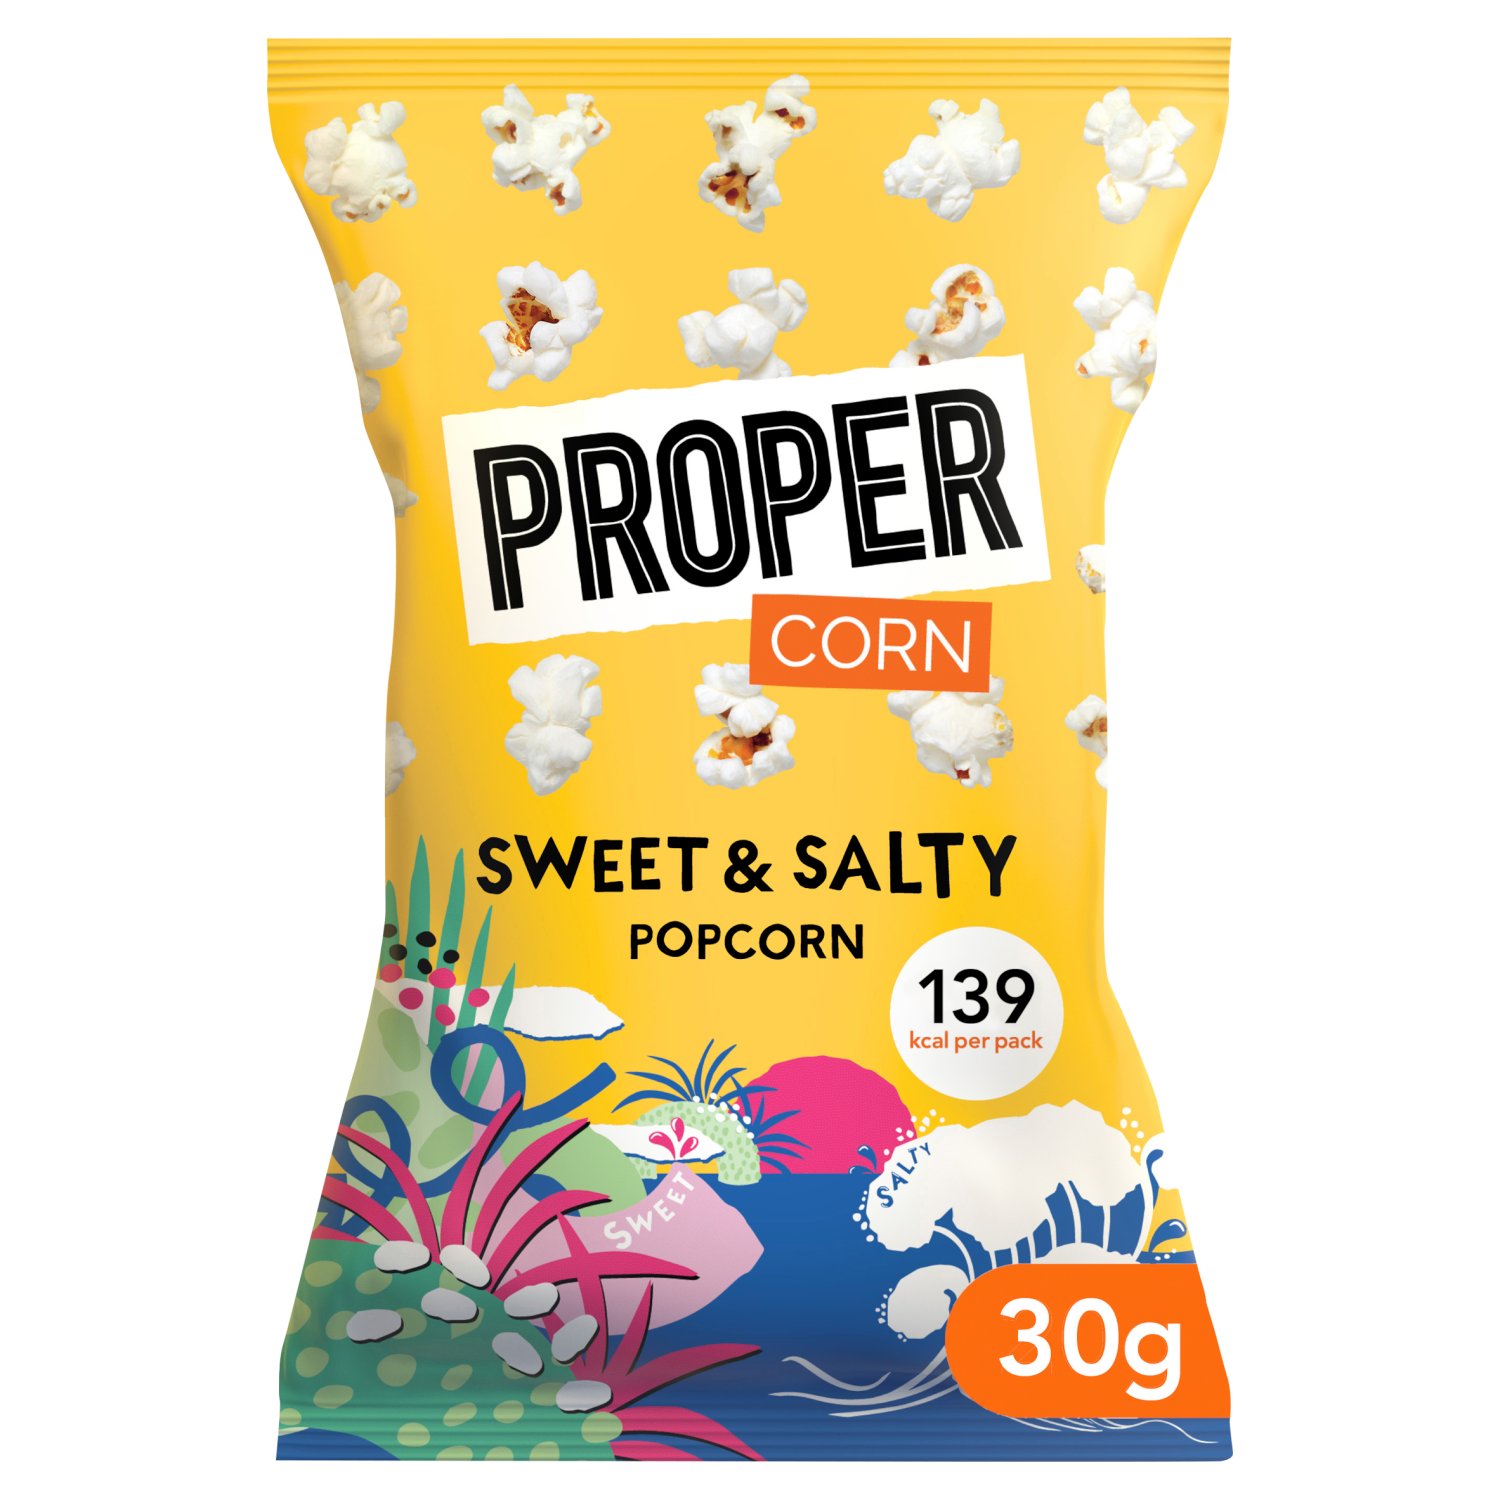 Propercorn Sweet & Salty Popcorn Bag (30 g)